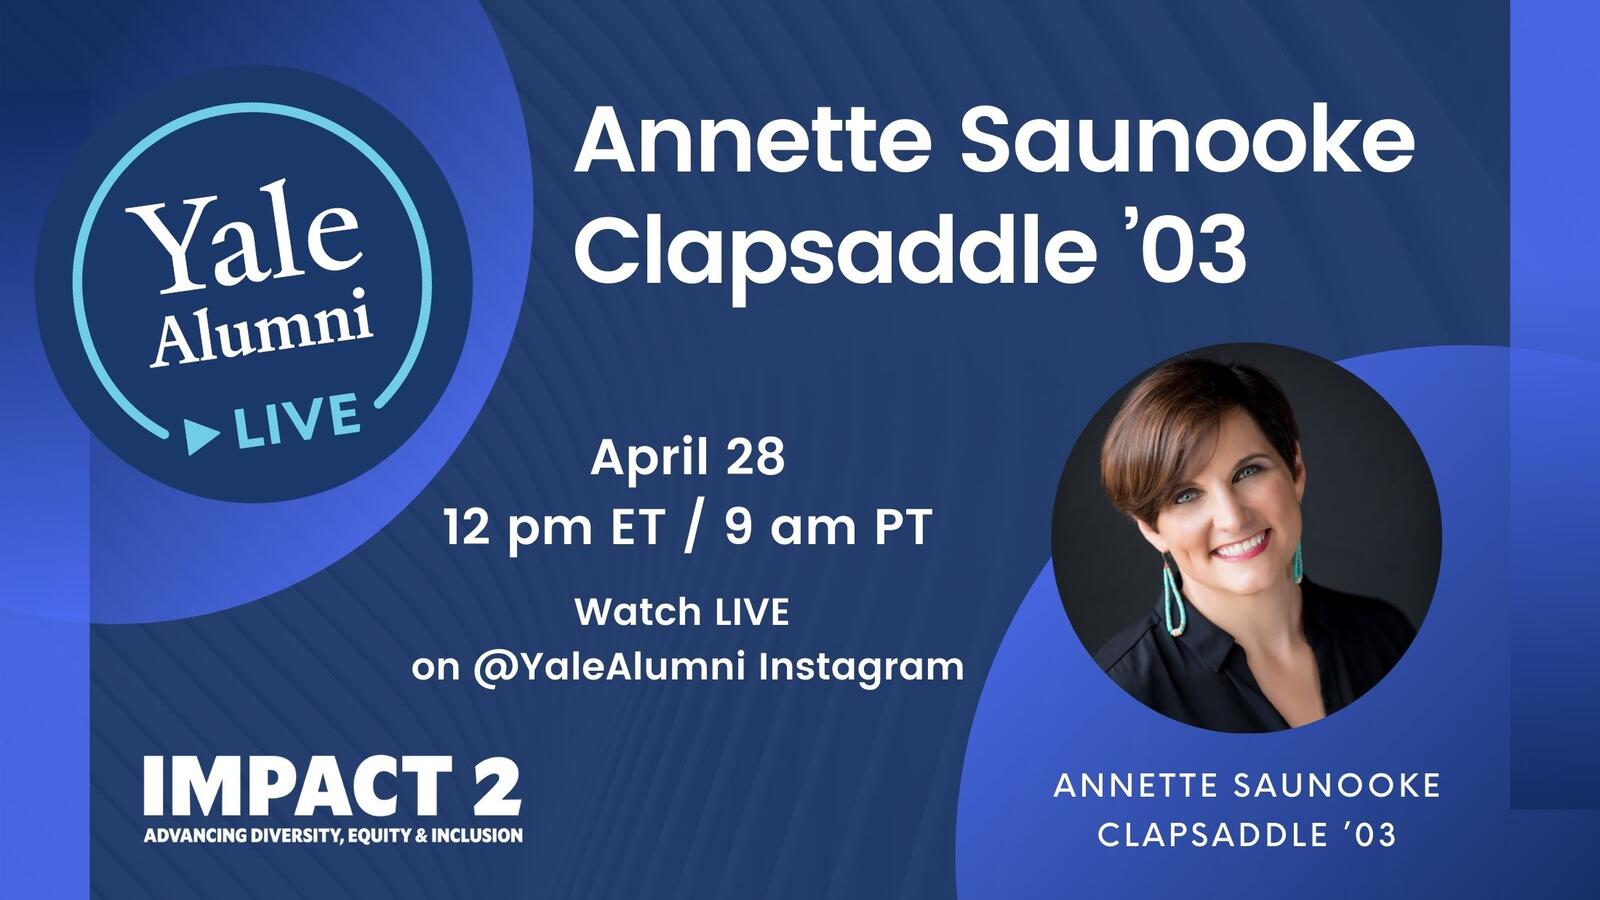 Yale Alumni LIVE: Annette Saunooke Clapsaddle ’03